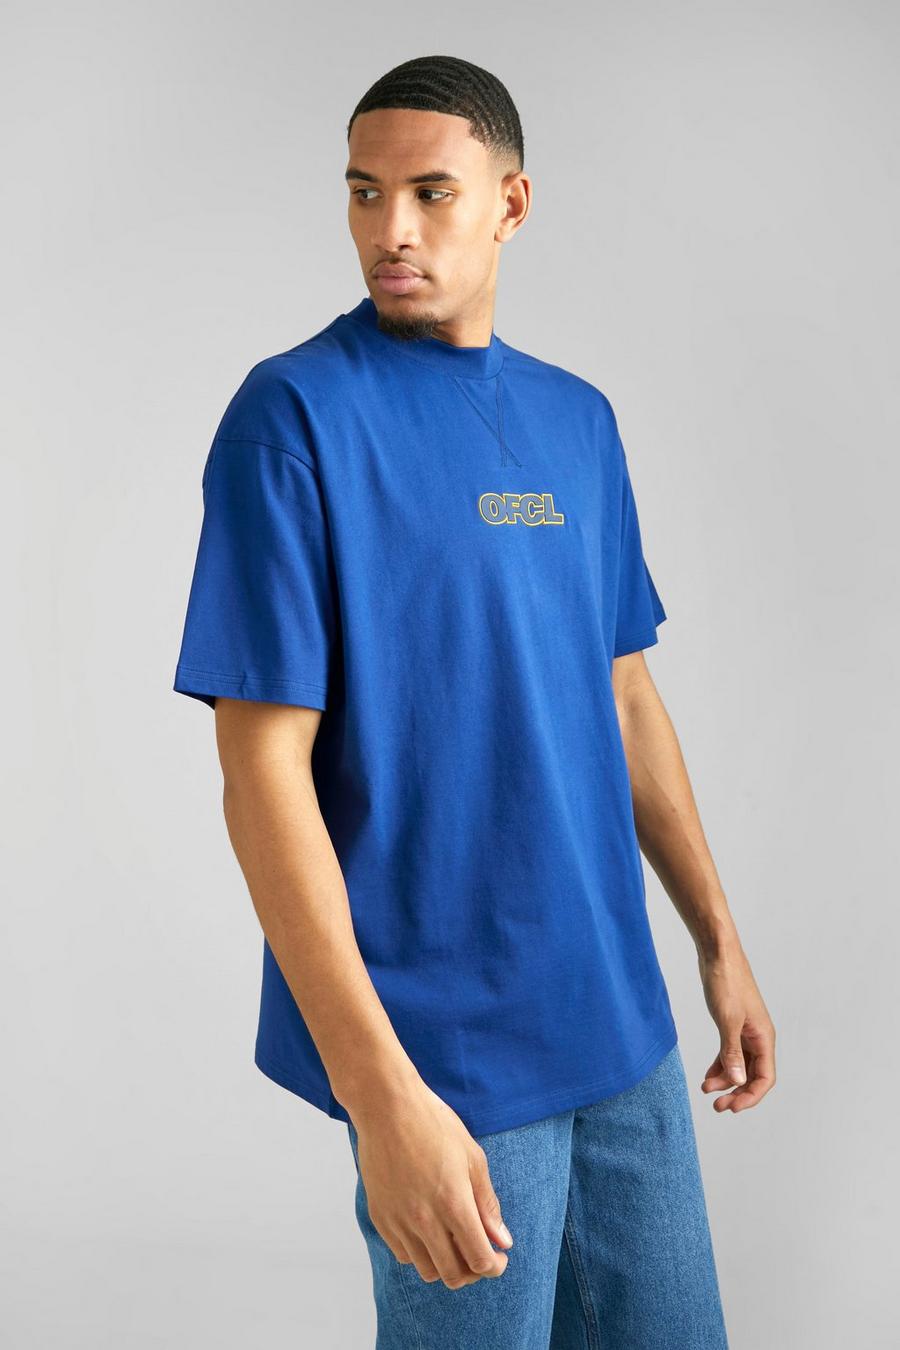 Camiseta Tall oversize Ofcl gruesa, Navy azul marino